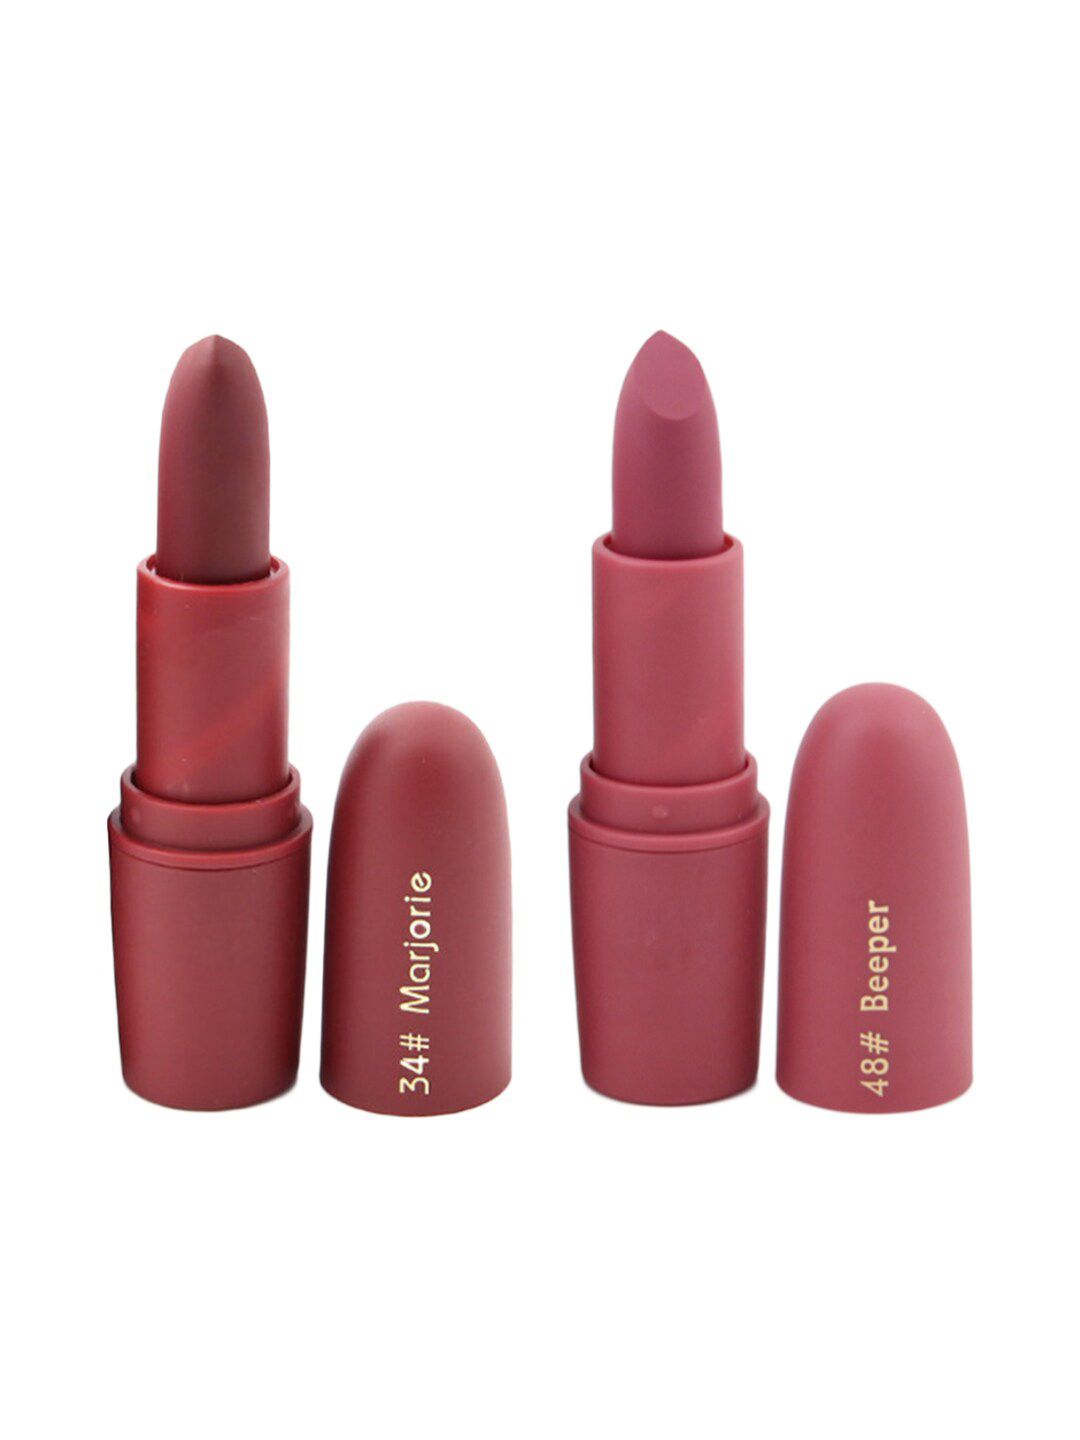 MISS ROSE Set of 2 Matte Creamy Lipsticks - Marjorie 34 & Beeper 48 Price in India